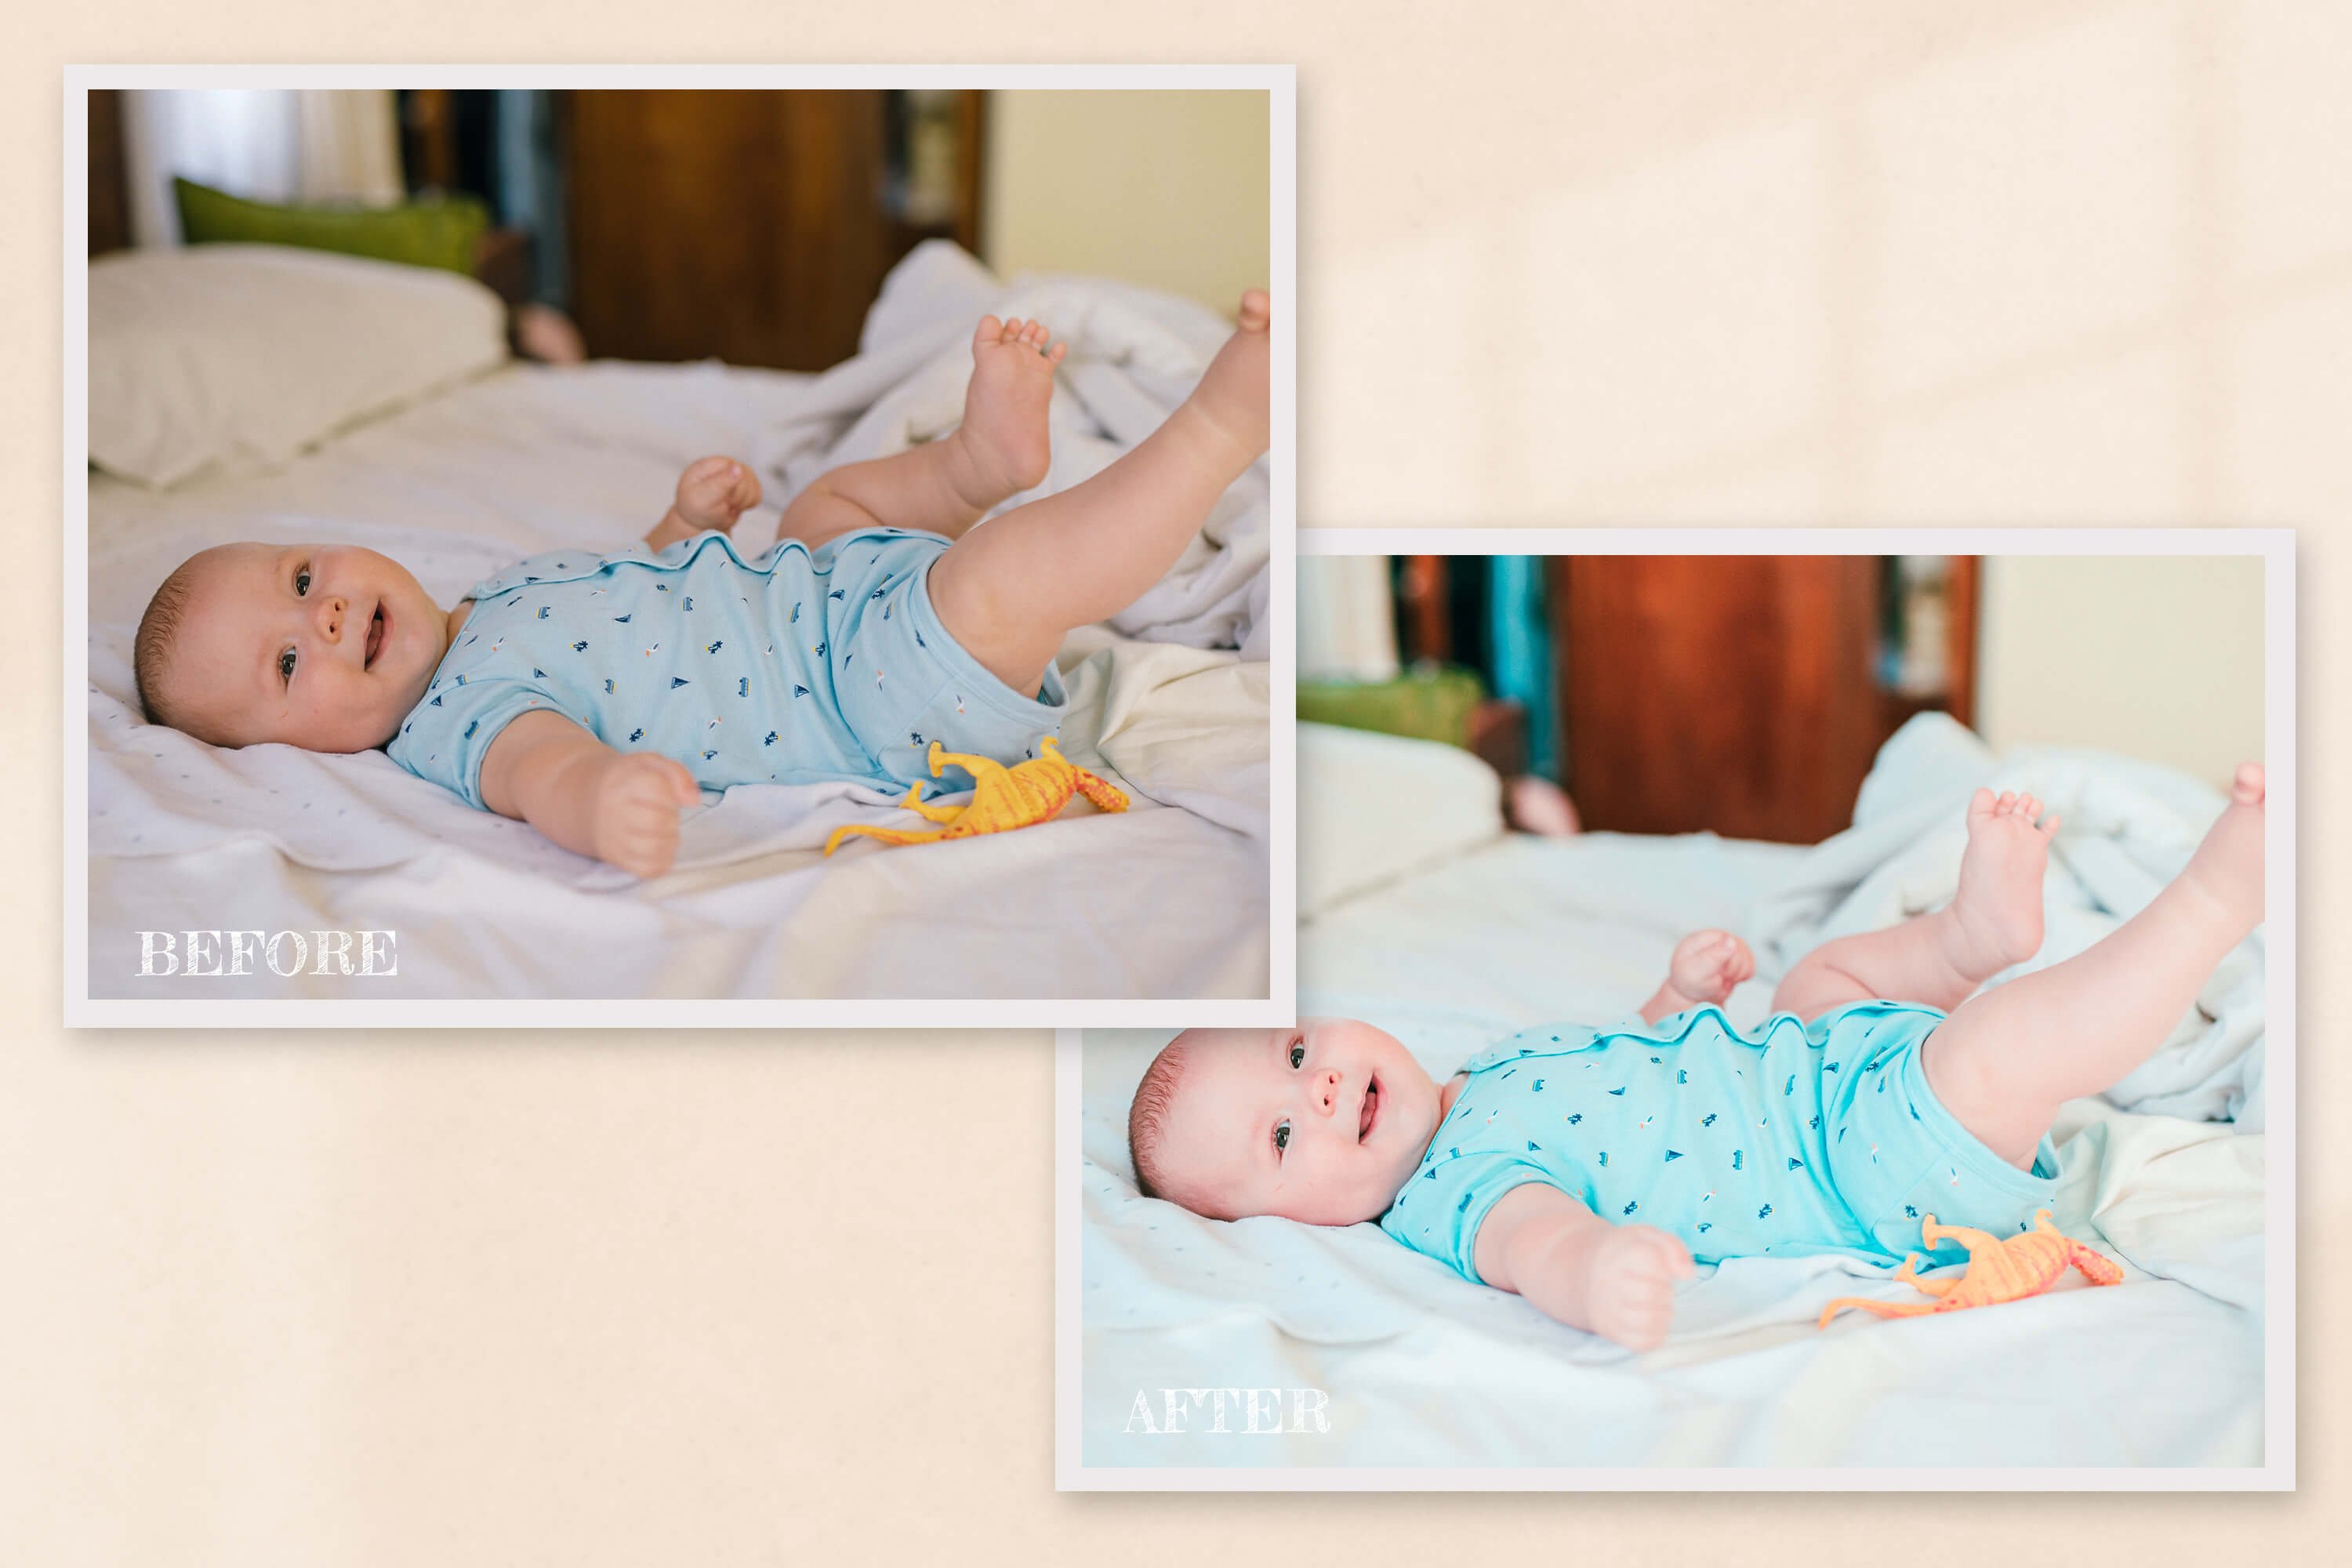 Baby Lightroom Photoshop LUTs 6520693